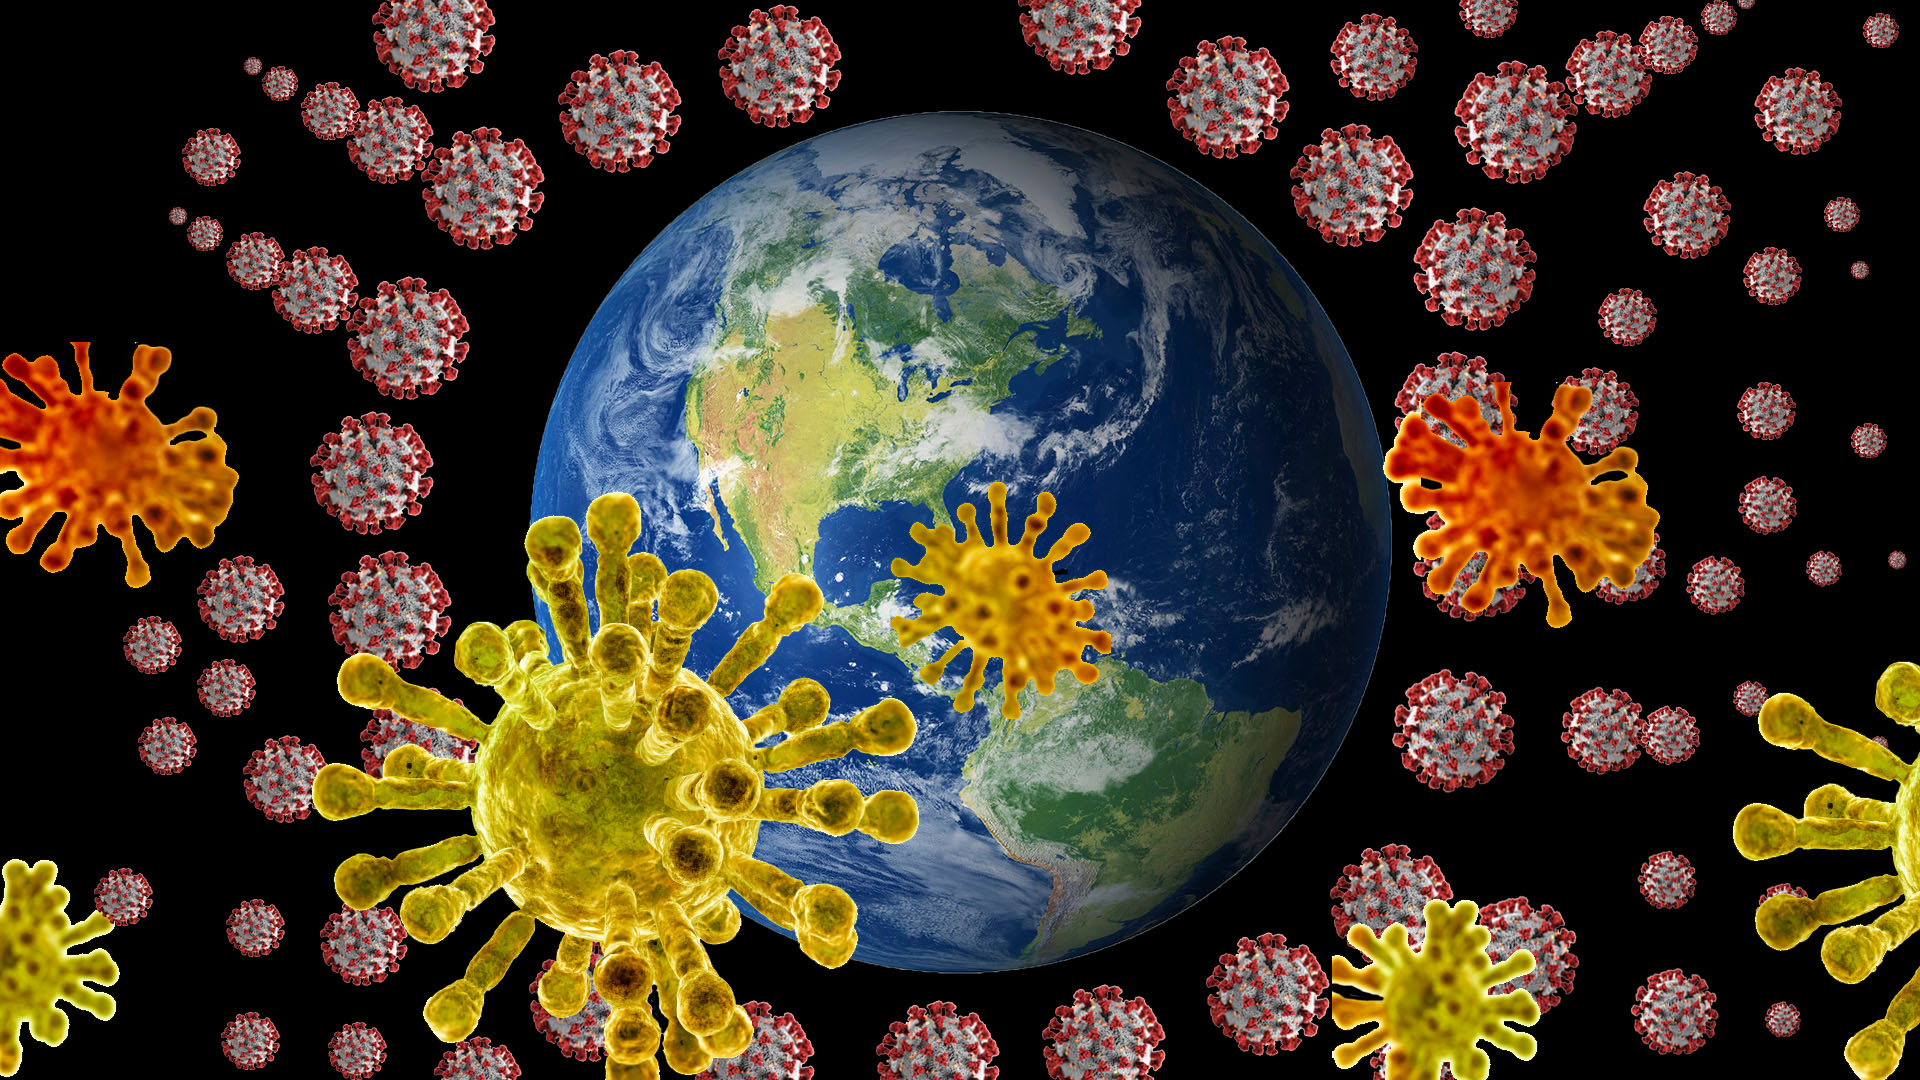 Global coronavirus deaths hit 900,000 as cases surge in India